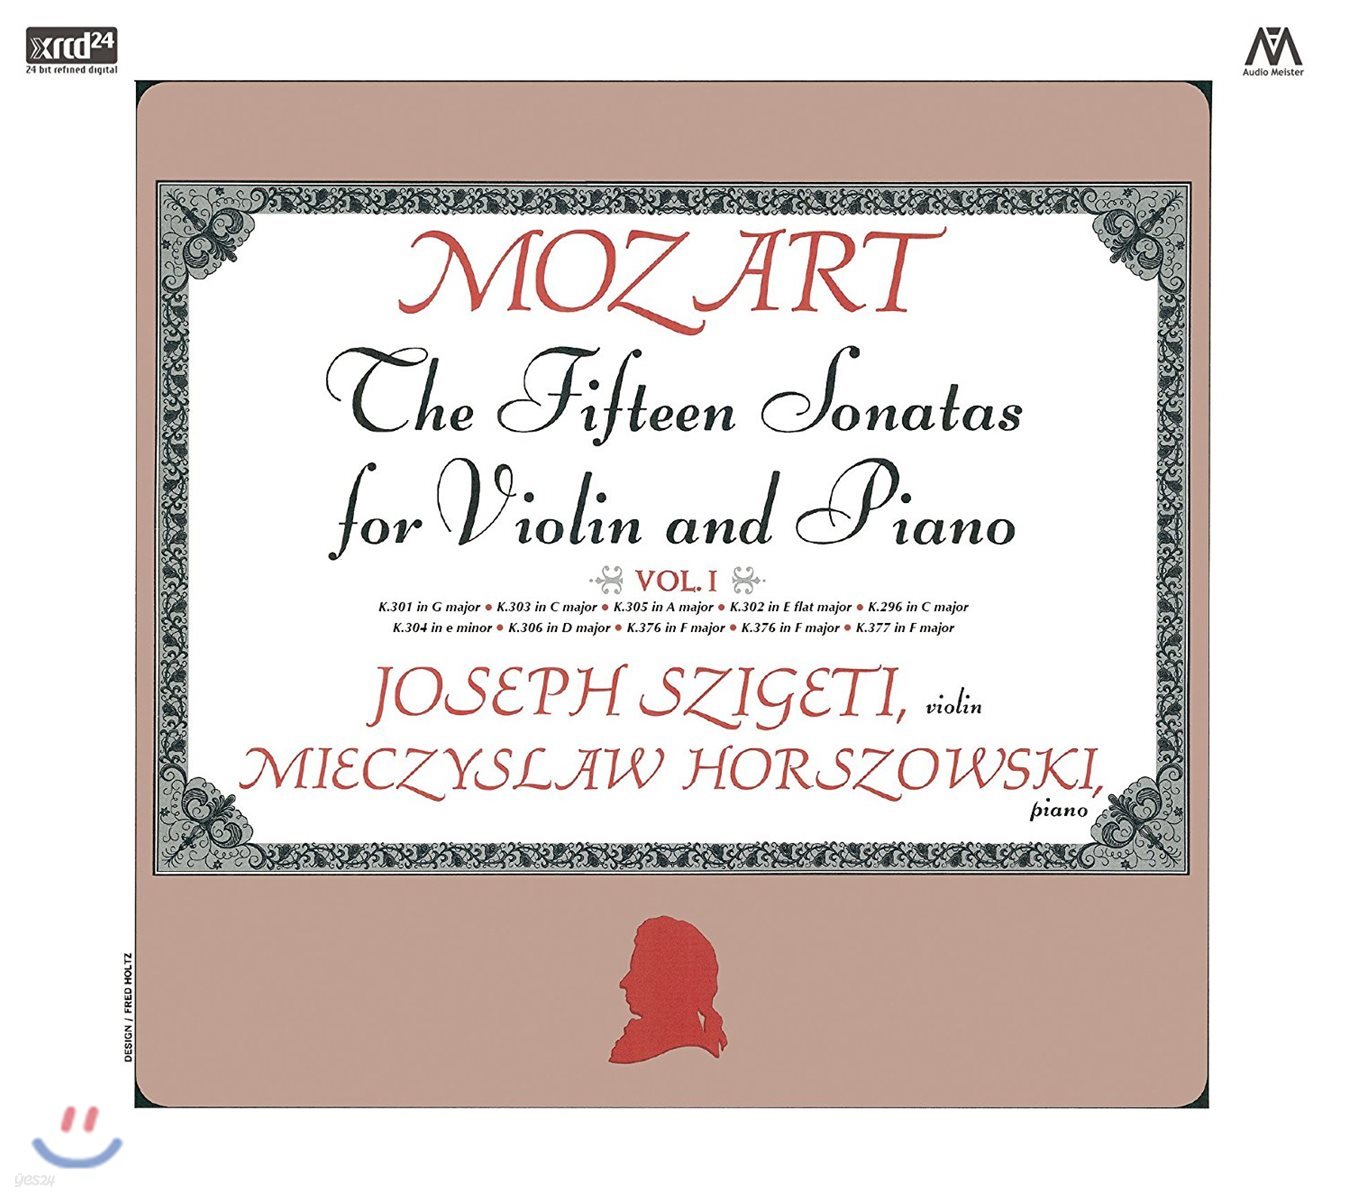 Joseph Szigeti 모차르트: 바이올린 소나타 1집 - 요제프 시게티, 미예치슬라프 호르조프스키 (Mozart: The Fifteen Sonatas for Violin and Piano Vol.I)